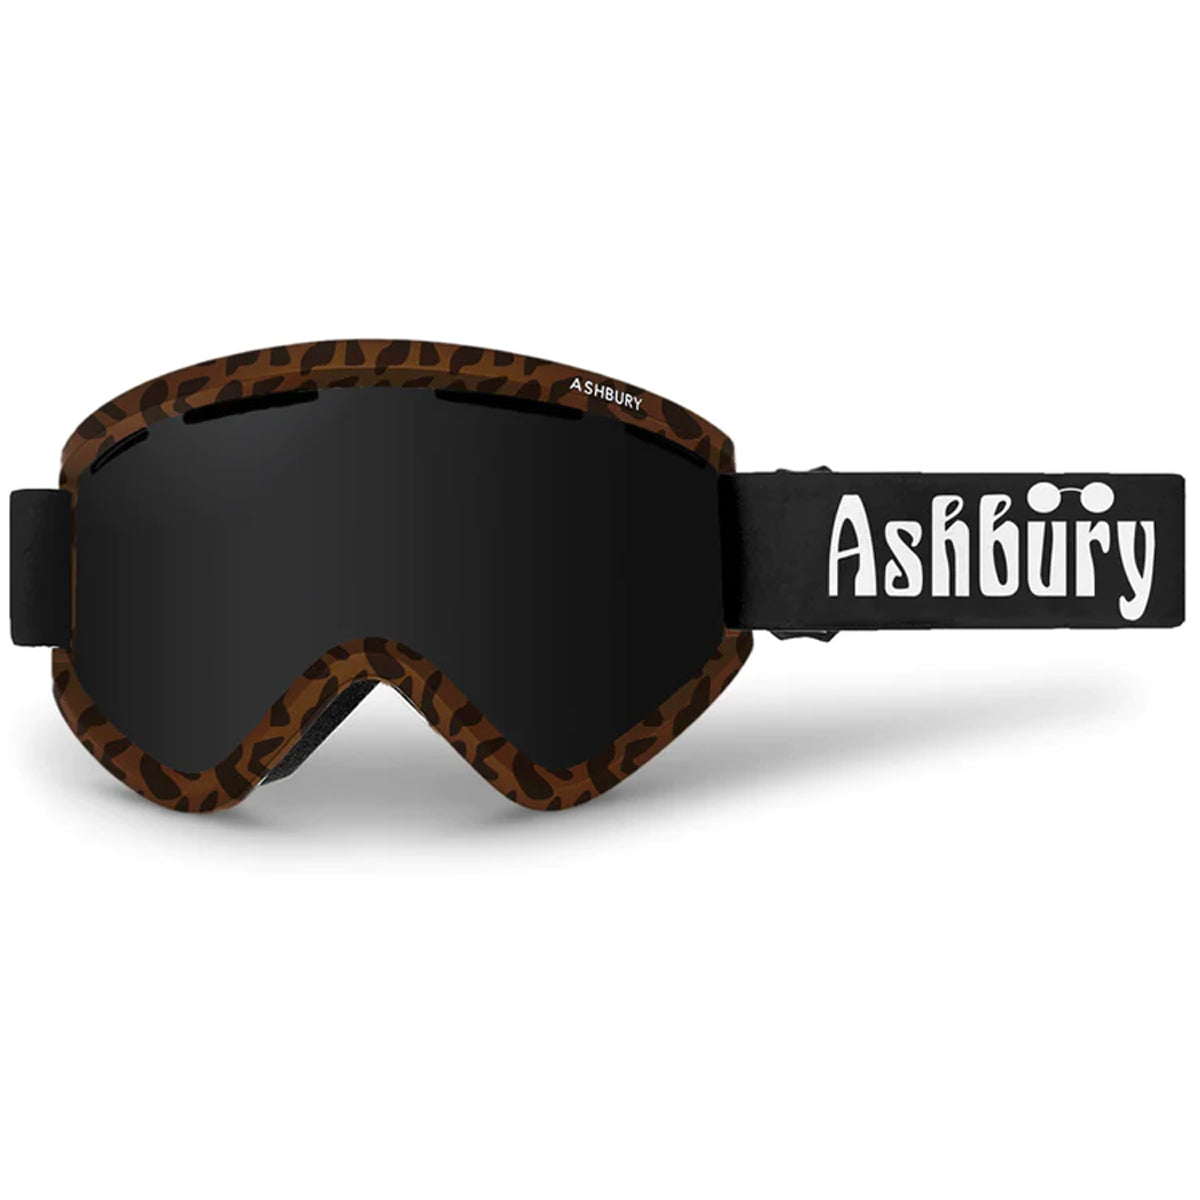 Ashbury Blackbird Snowboard Goggles - Og/Dark Smoke/Yellow Spare image 1